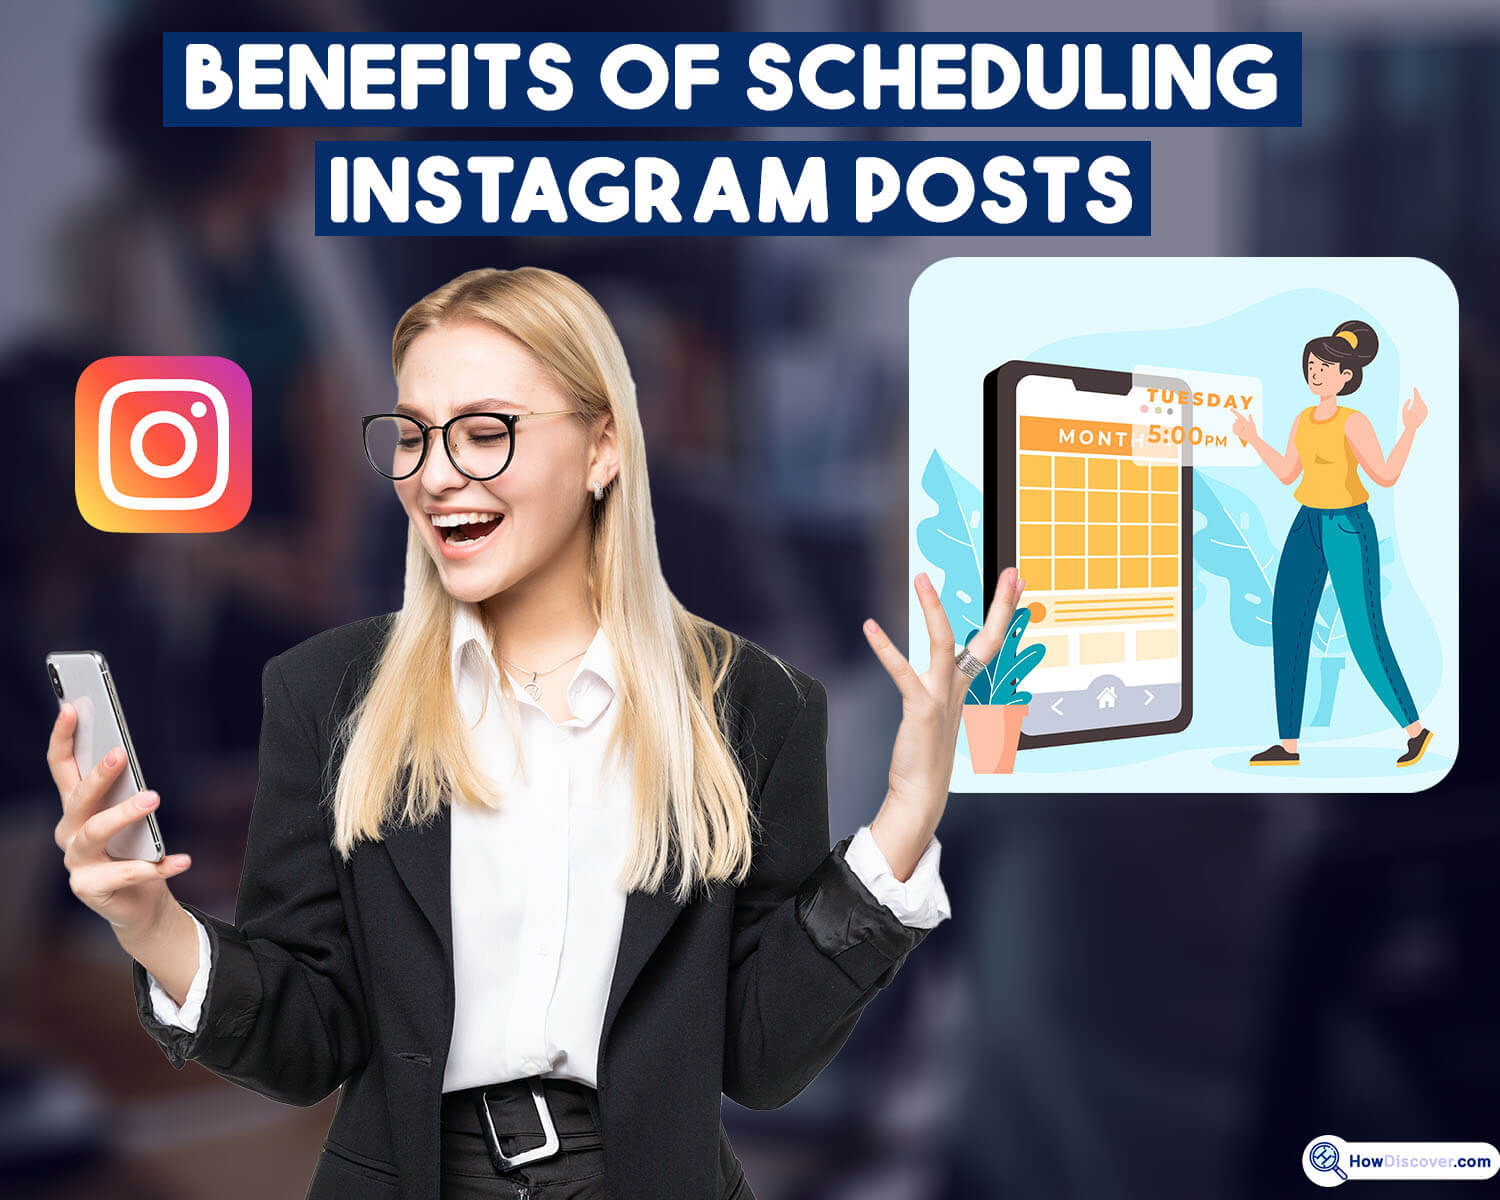 How to Schedule an Instagram Post